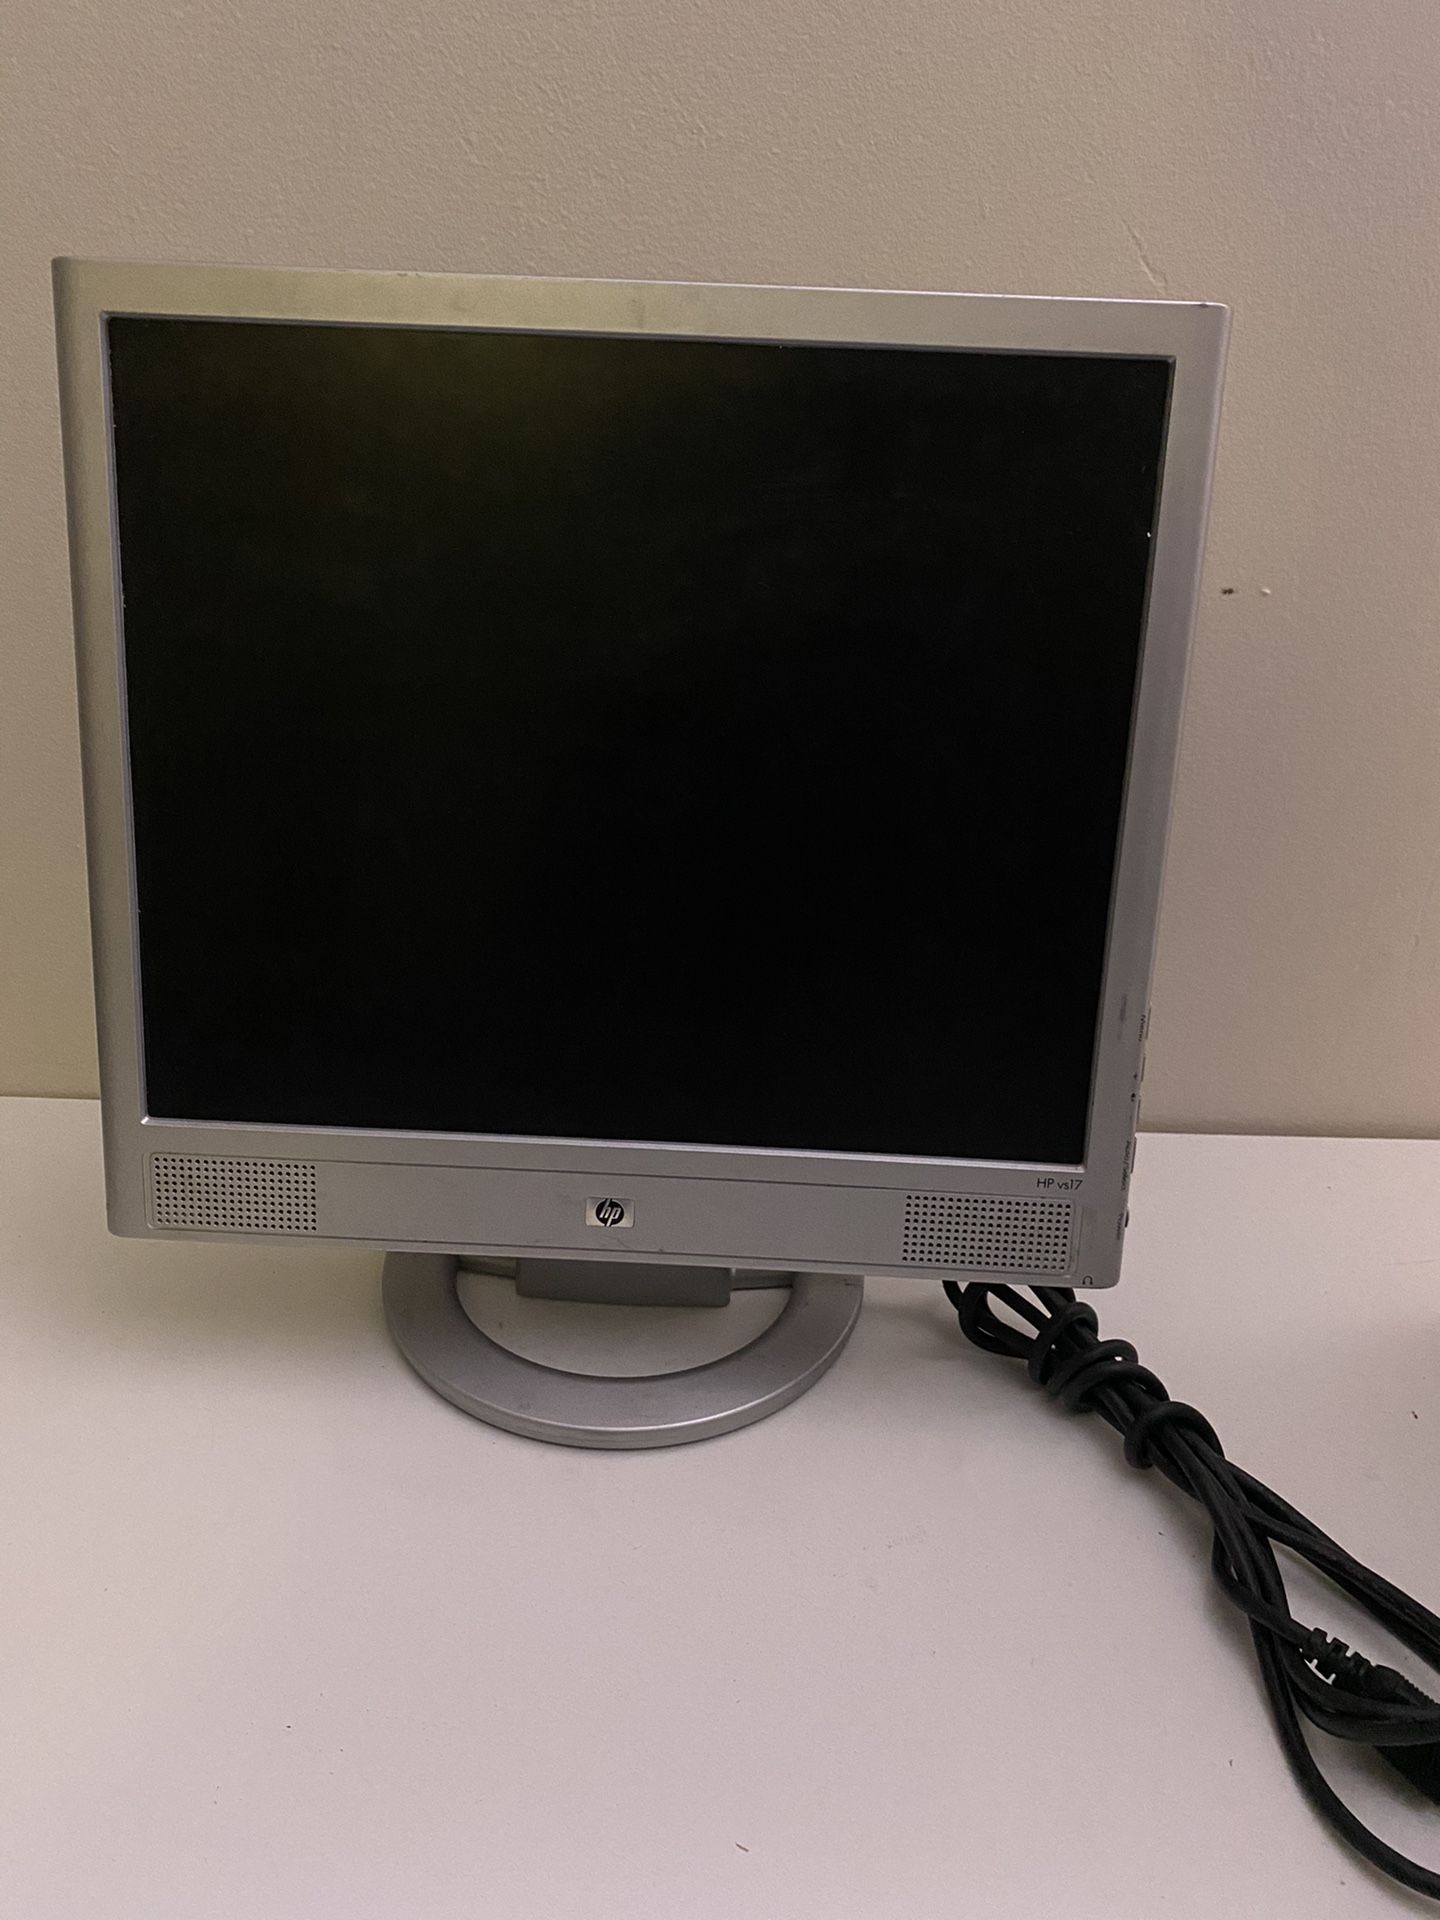 HP Vs17 17” Computer Monitor Screen